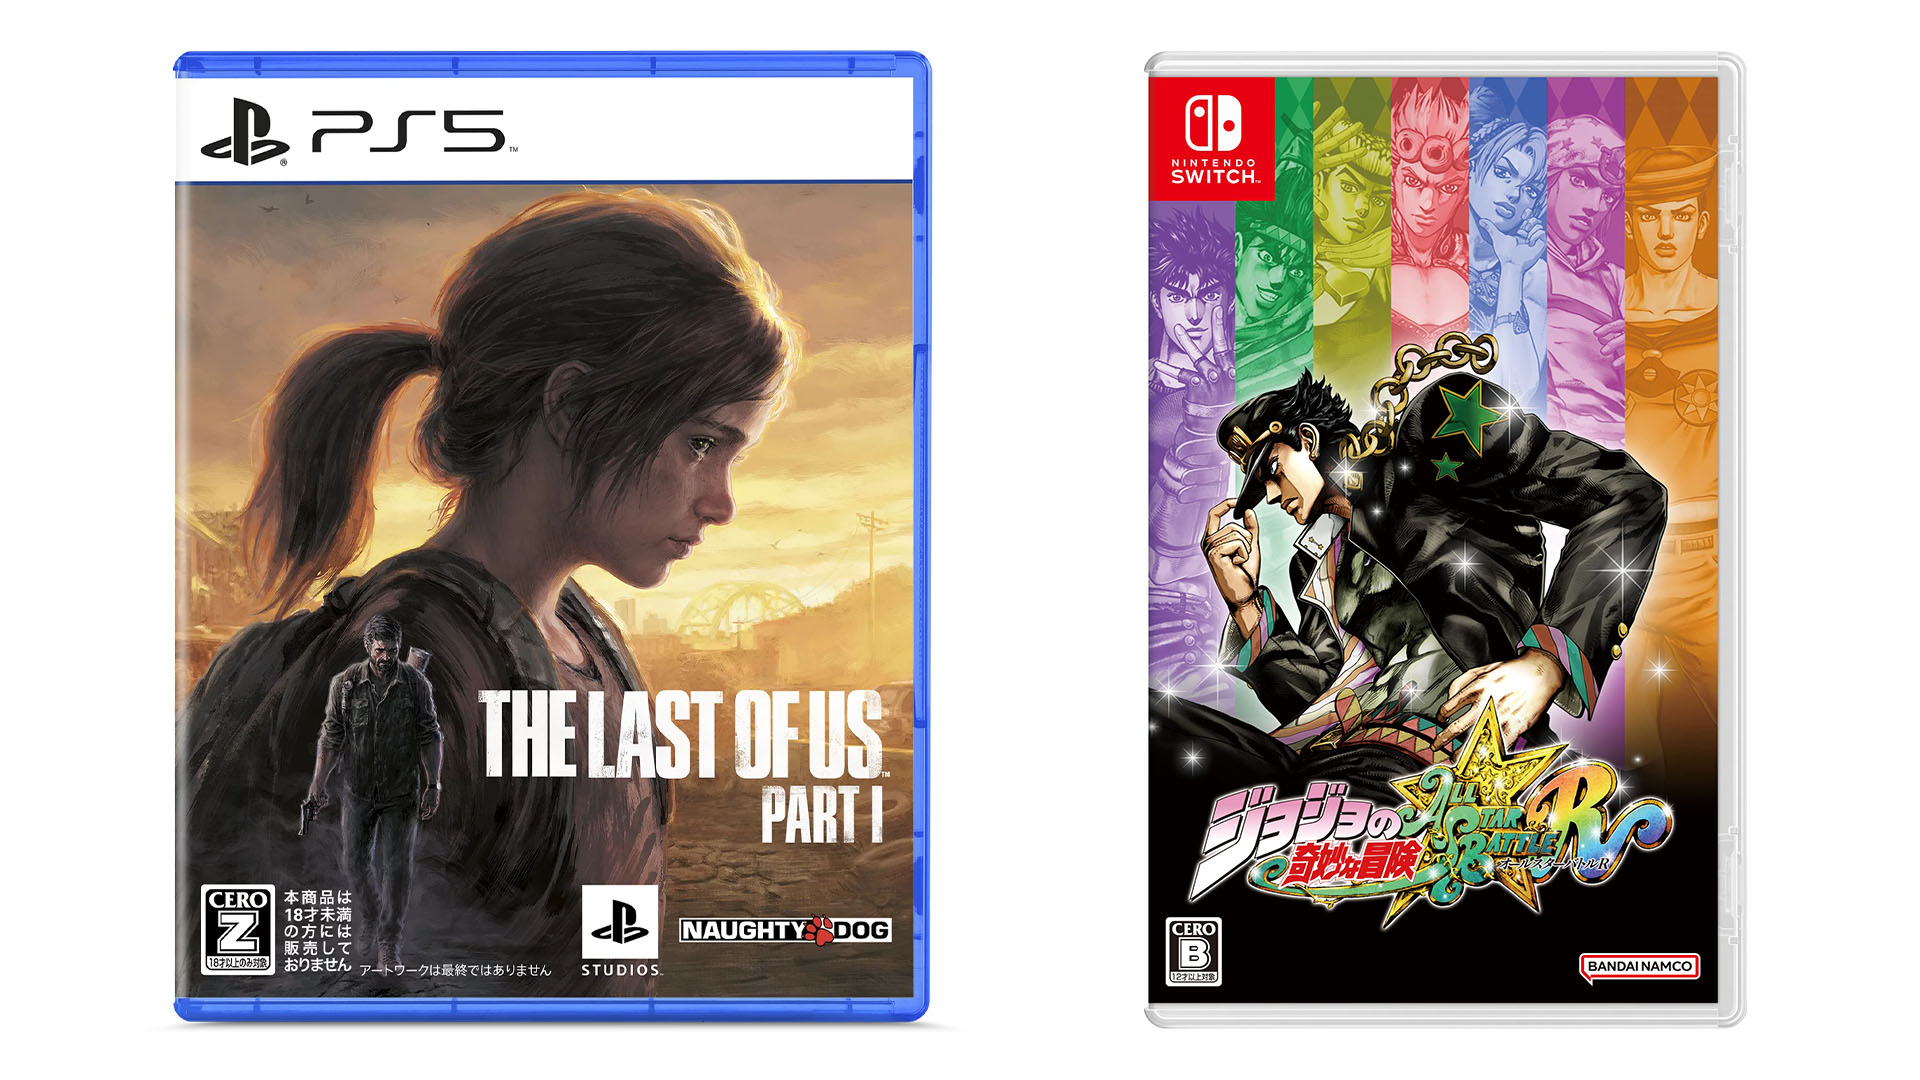 Lot of 6 Japanese PS3 Games incl JoJo's Bizarre Adventure All-Star Battle